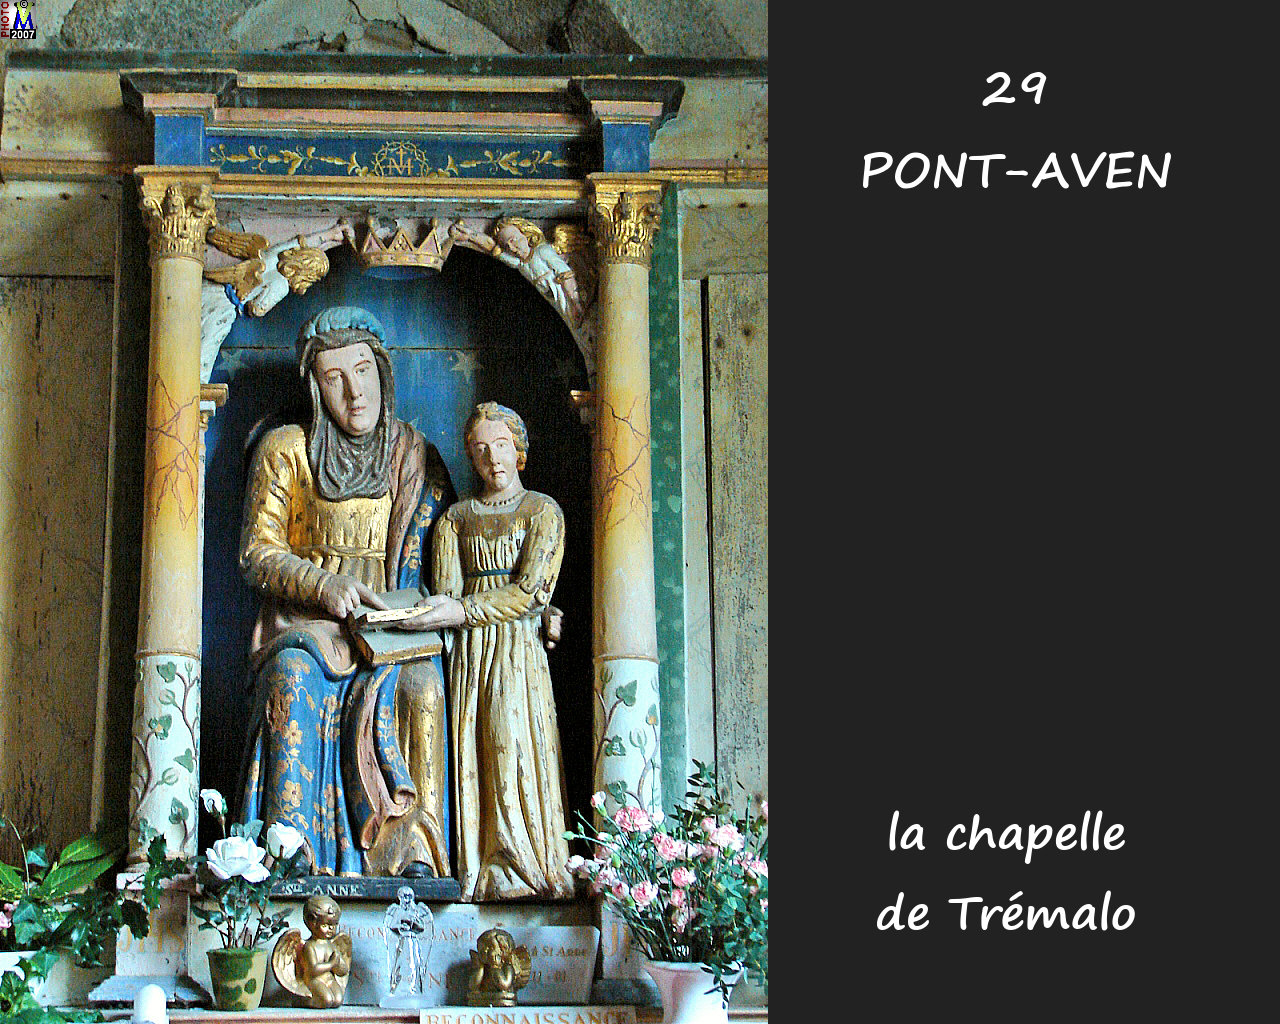 29PONT-AVEN-Tremalo-_chapelle_212.jpg